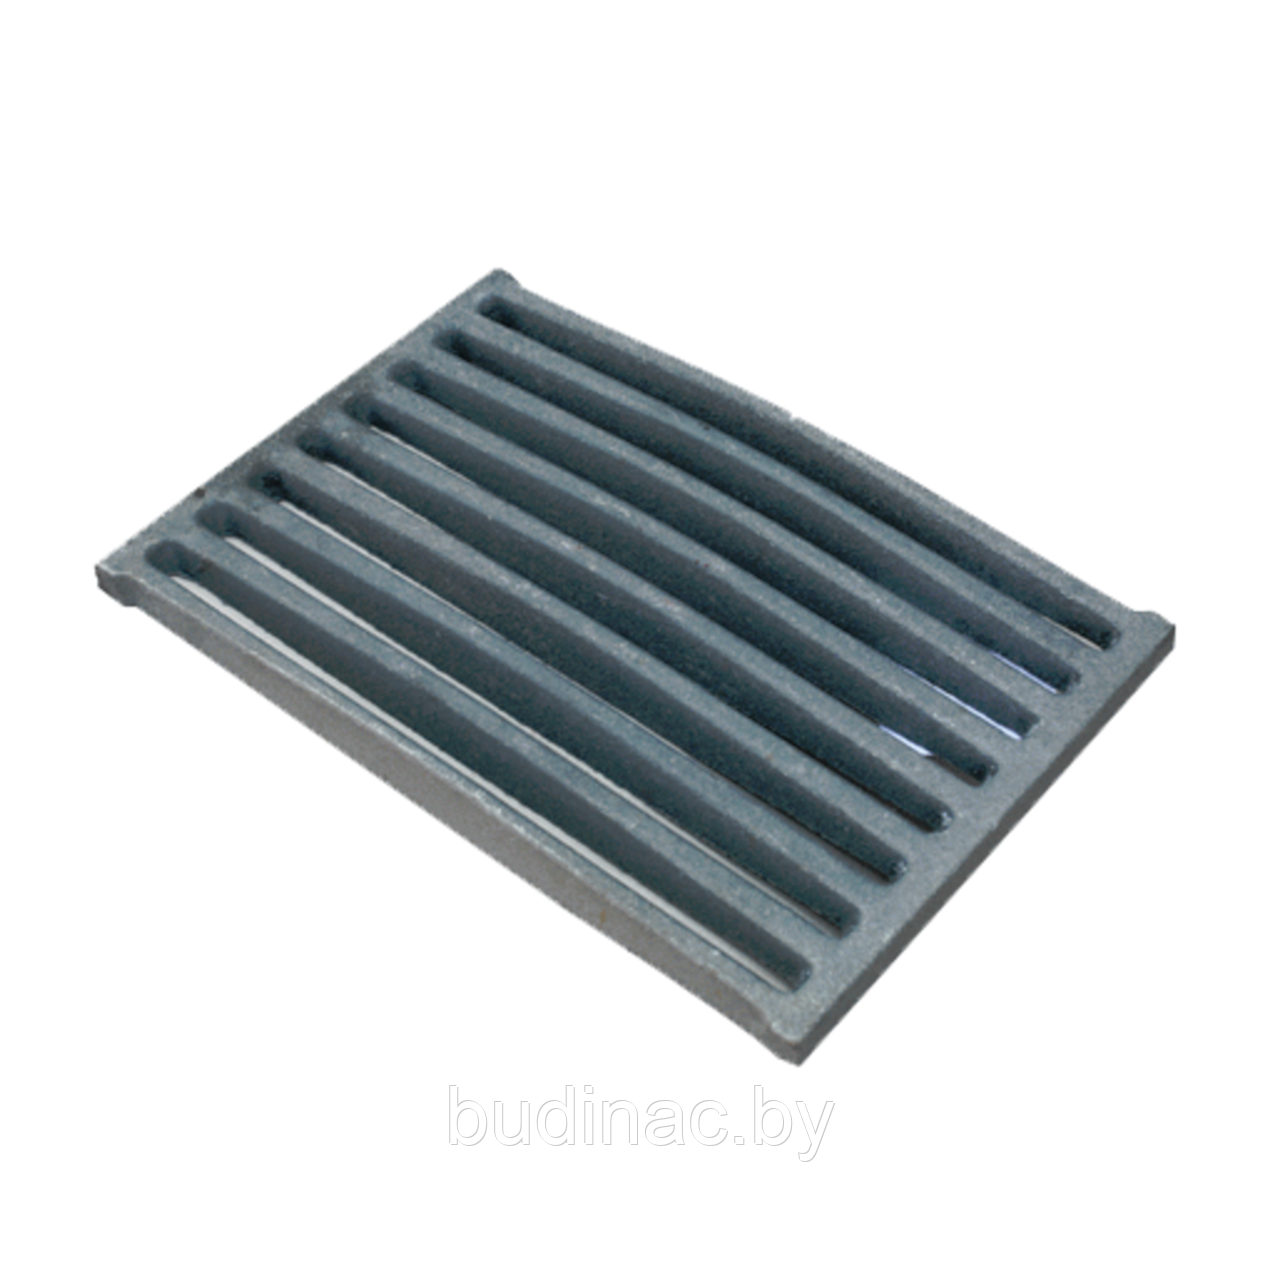 Решетка колосниковая для угля РД-3 180*250 (МТЗ)